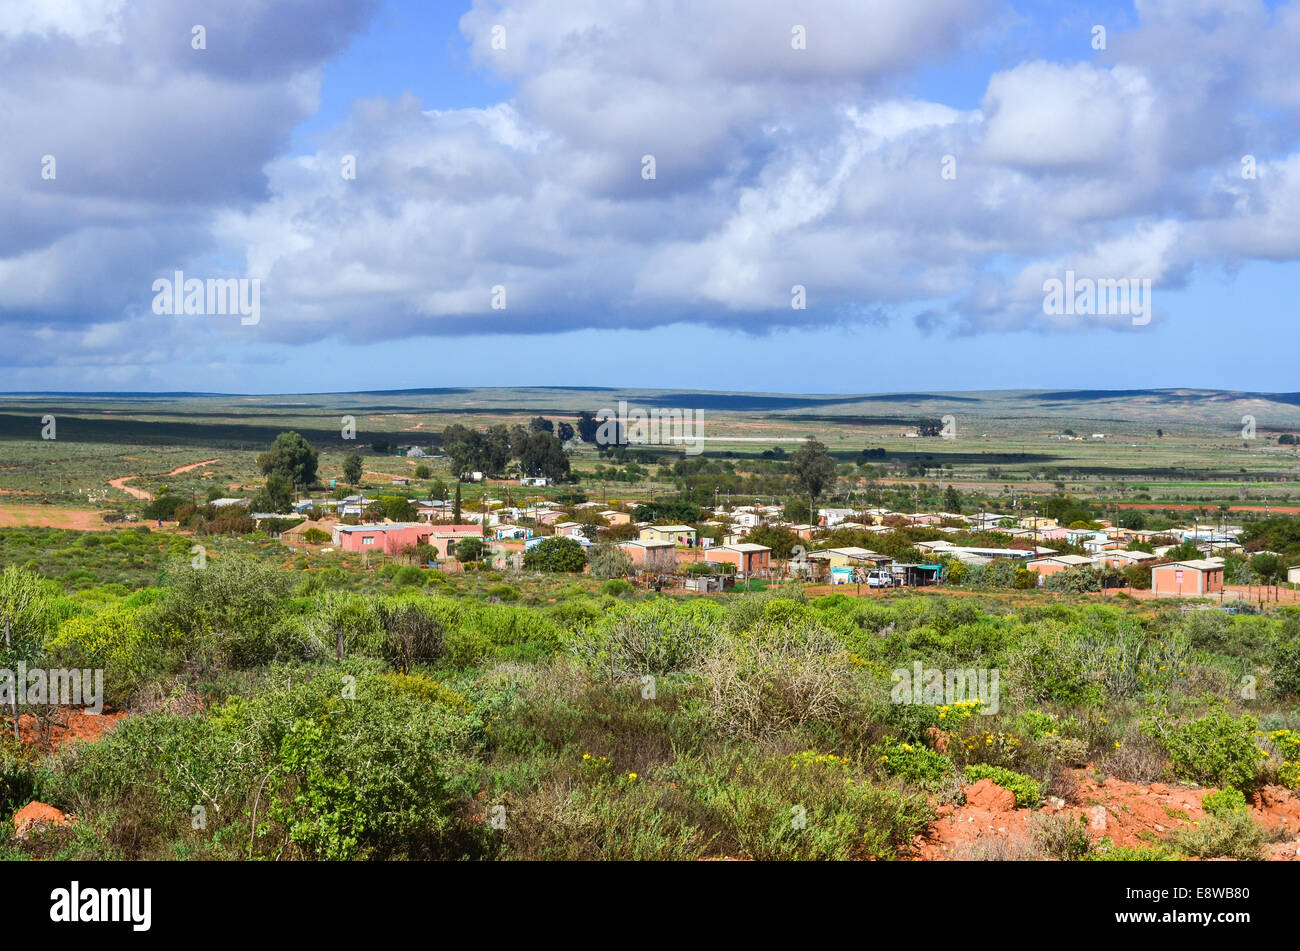 Ebenhaezer settlement near Lutzville, Western Cape, South Africa Stock Photo